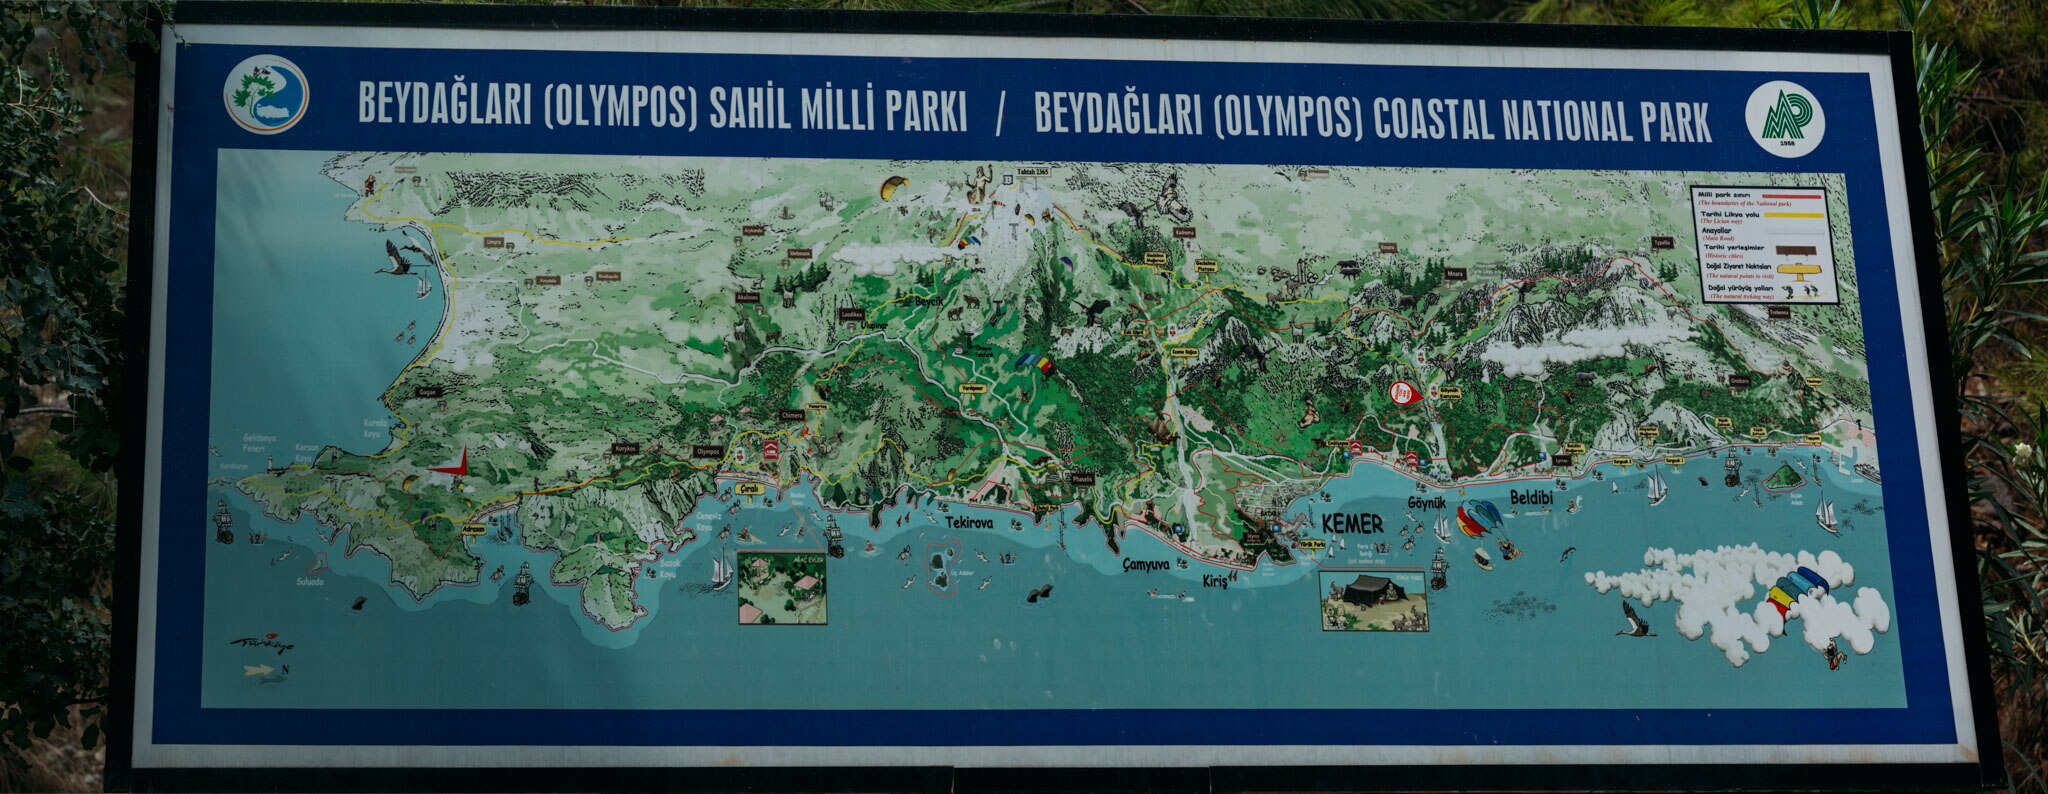 Olympos Beydagları National Park